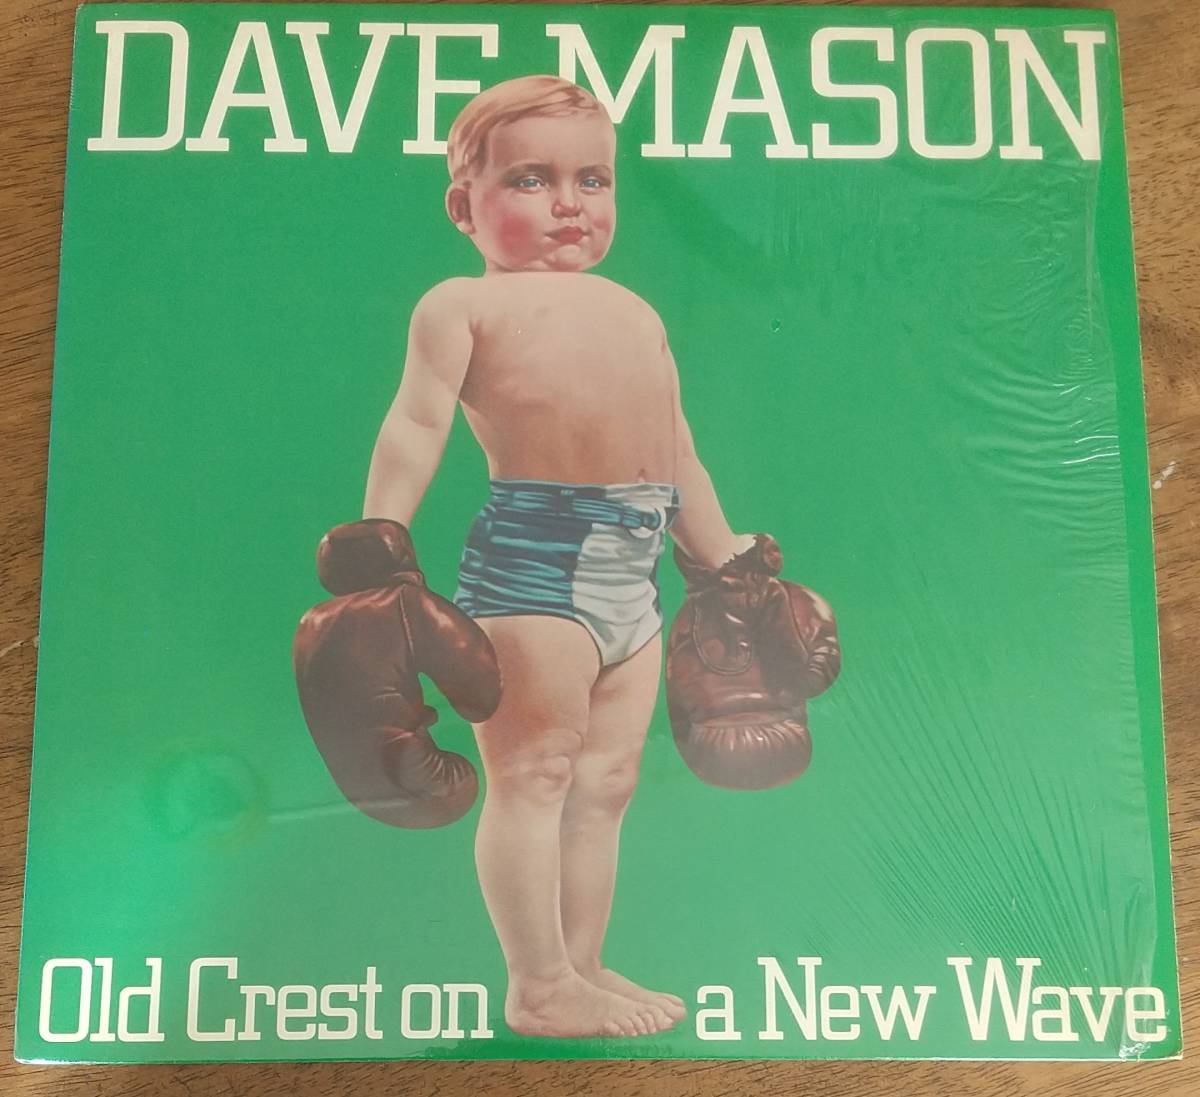 USA盤ＬＰレコード ◆ デイヴ・メイスン OLD CREST ON A NEW WAVE ◆ 明日へのチャンピオン DAVE MASON_画像1